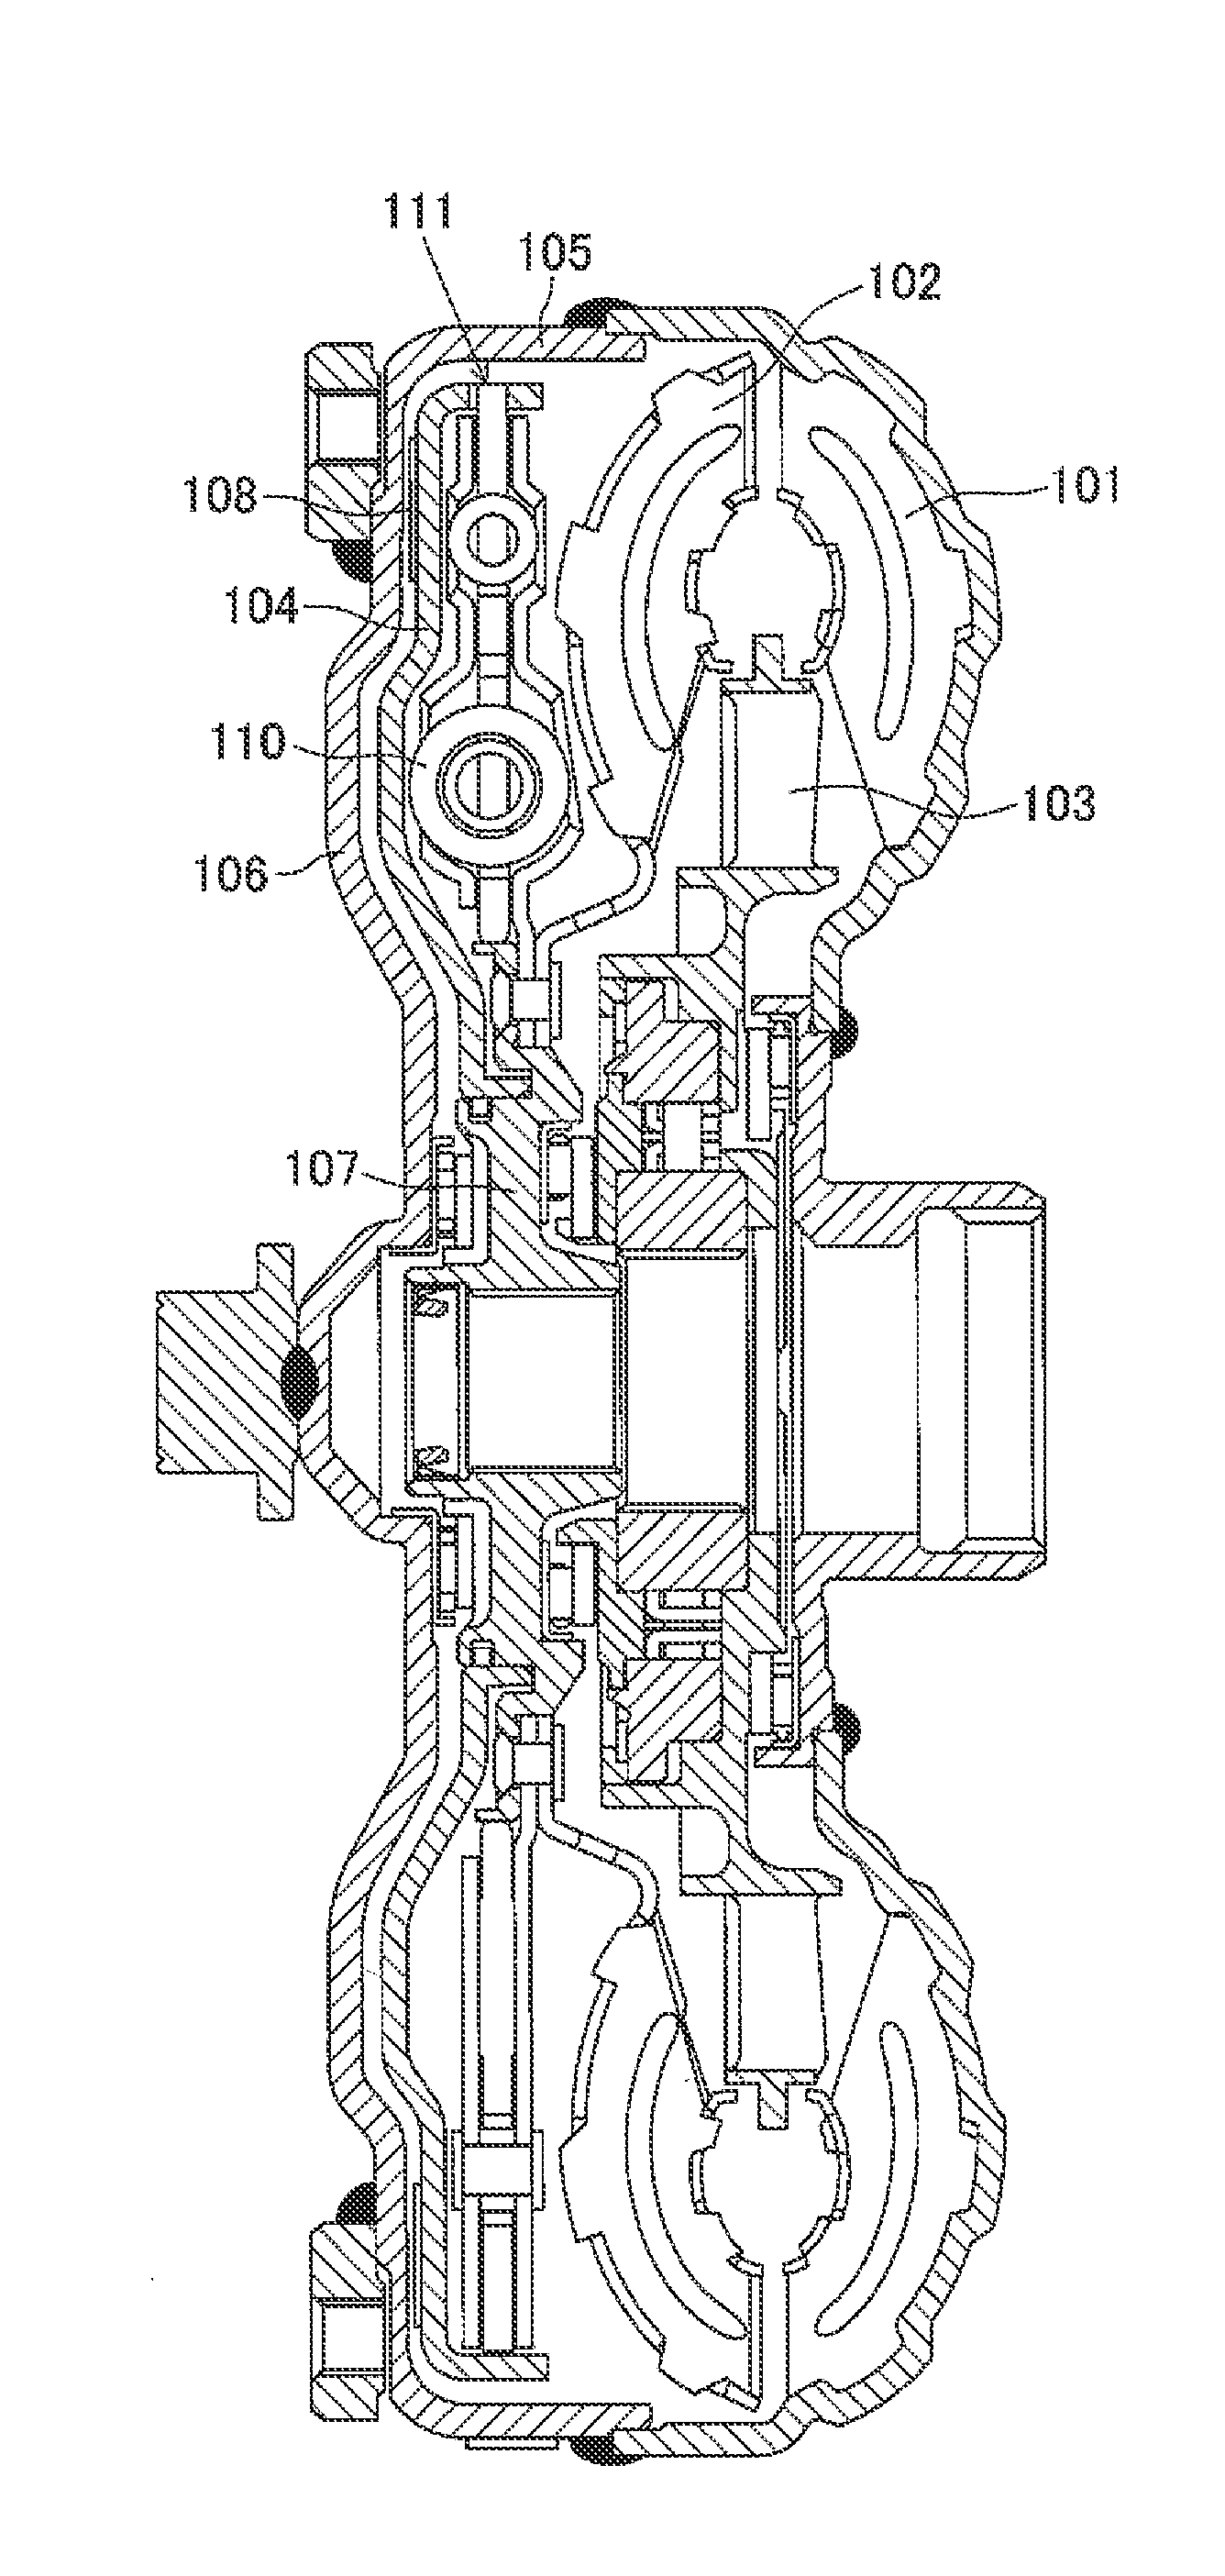 Arc spring and damper apparatus